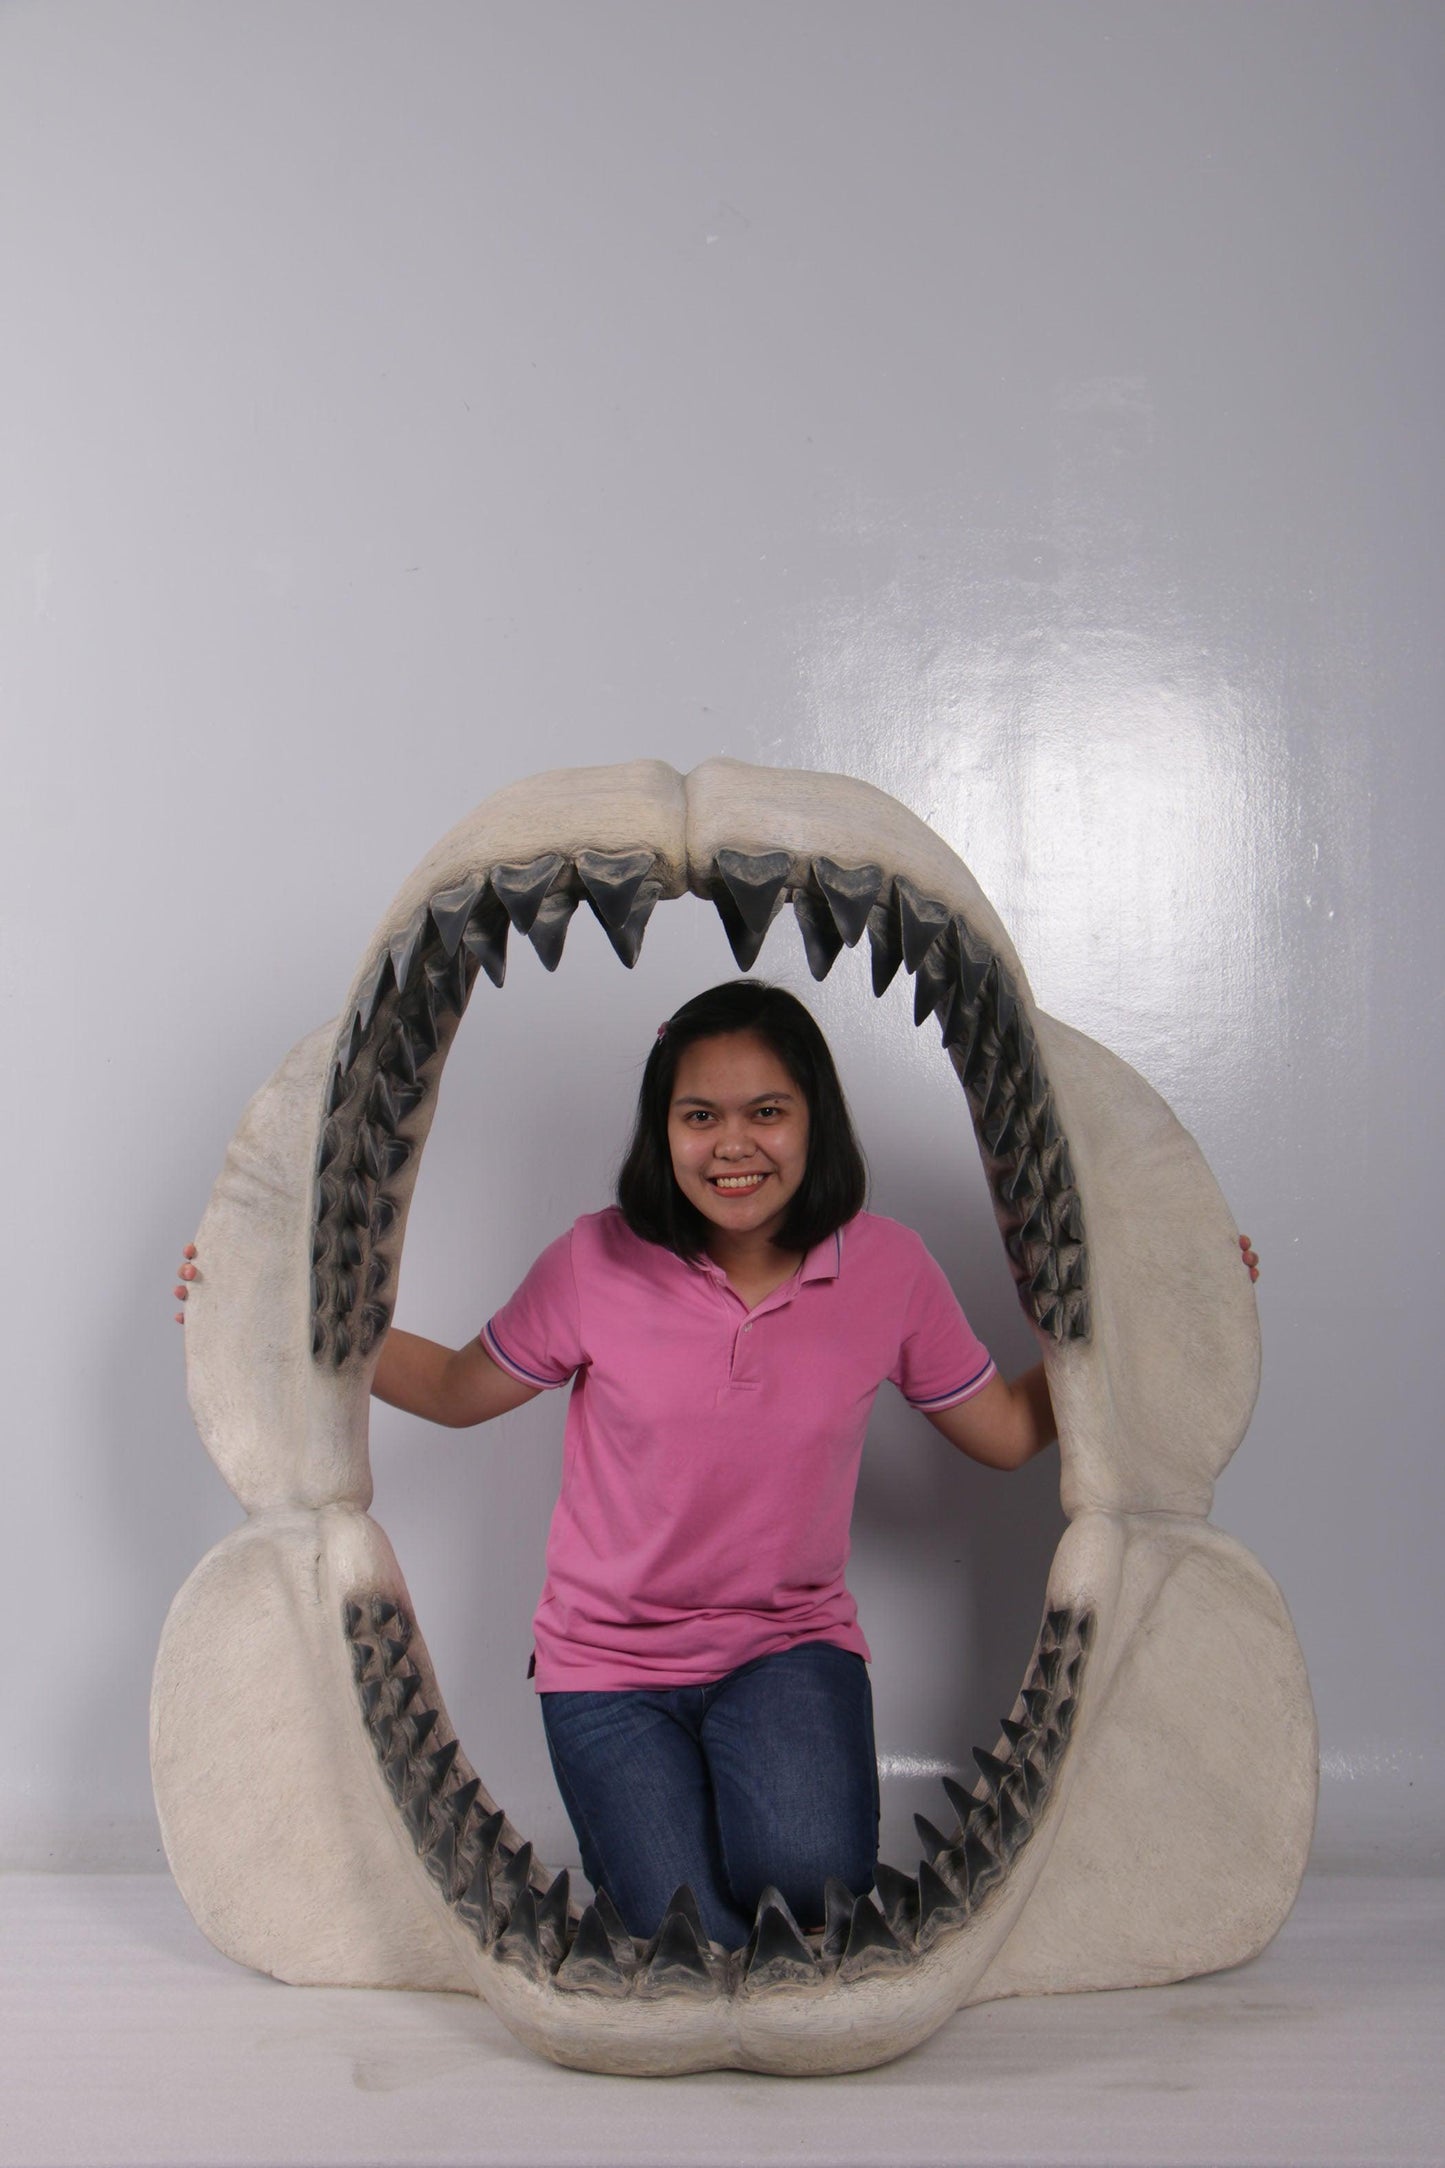 Megalodon Shark Jaw Statue